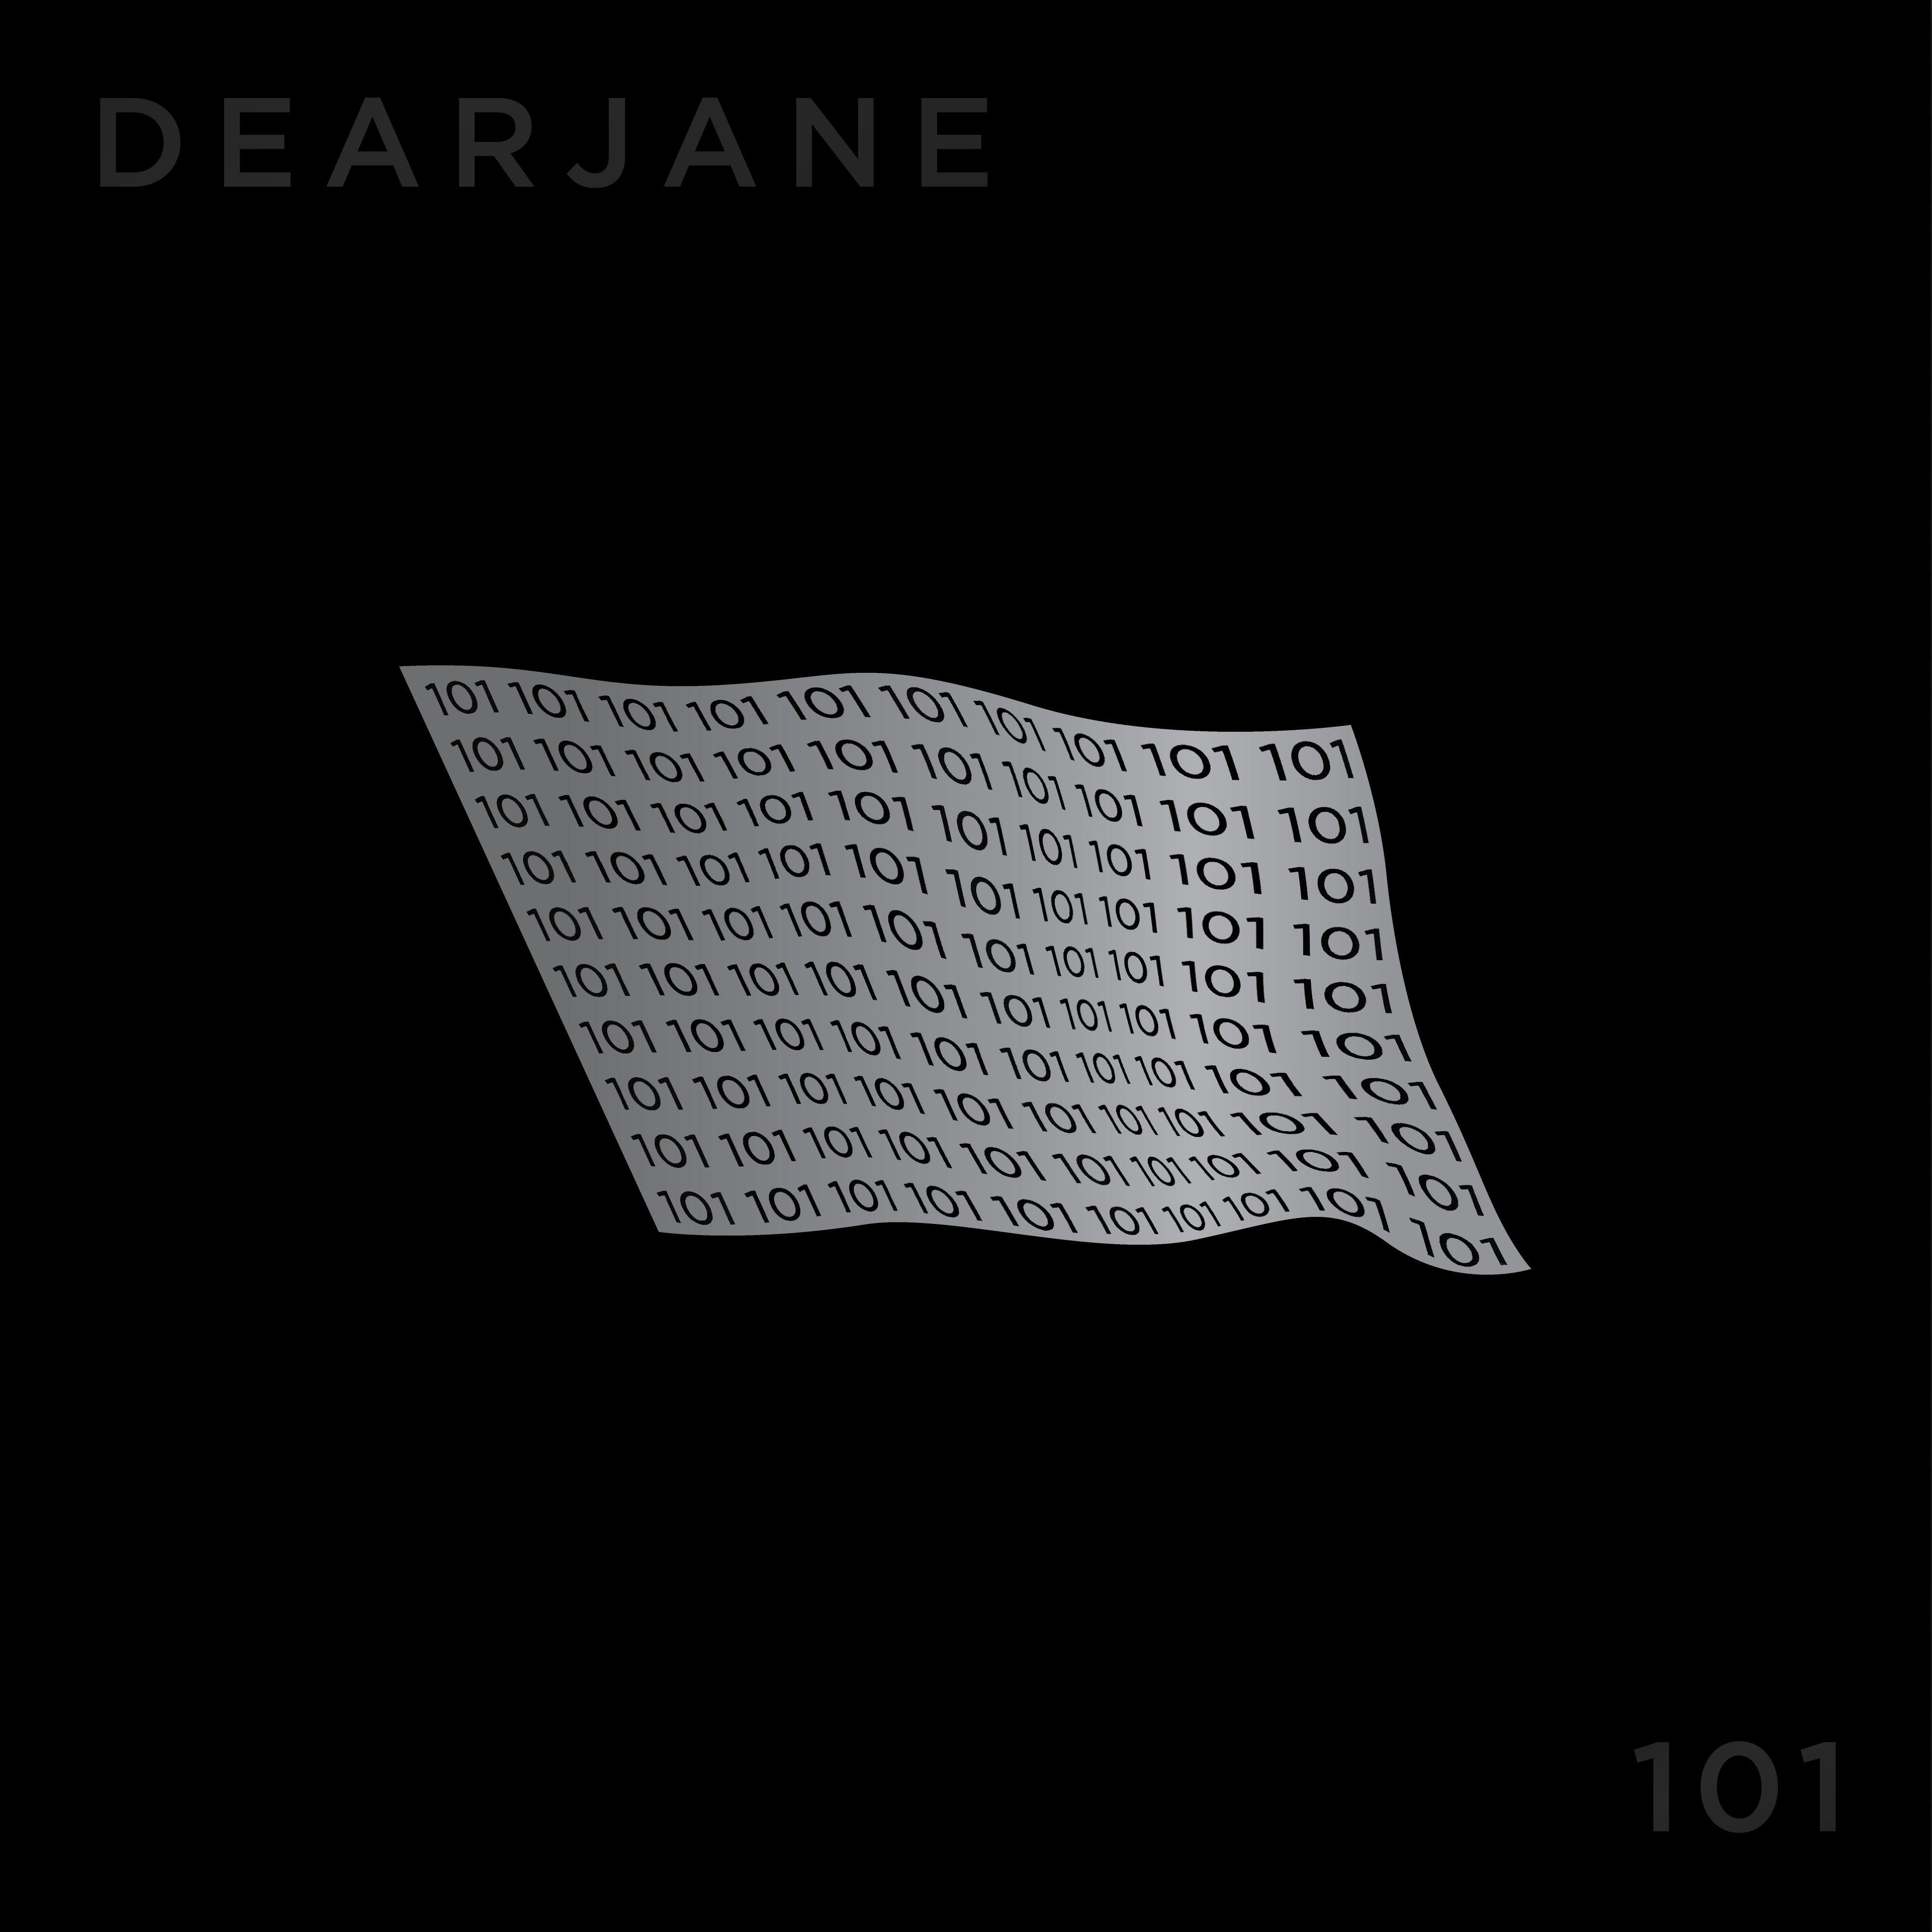 爱后余生 (Dear Jane Studio Live) - Dear Jane 